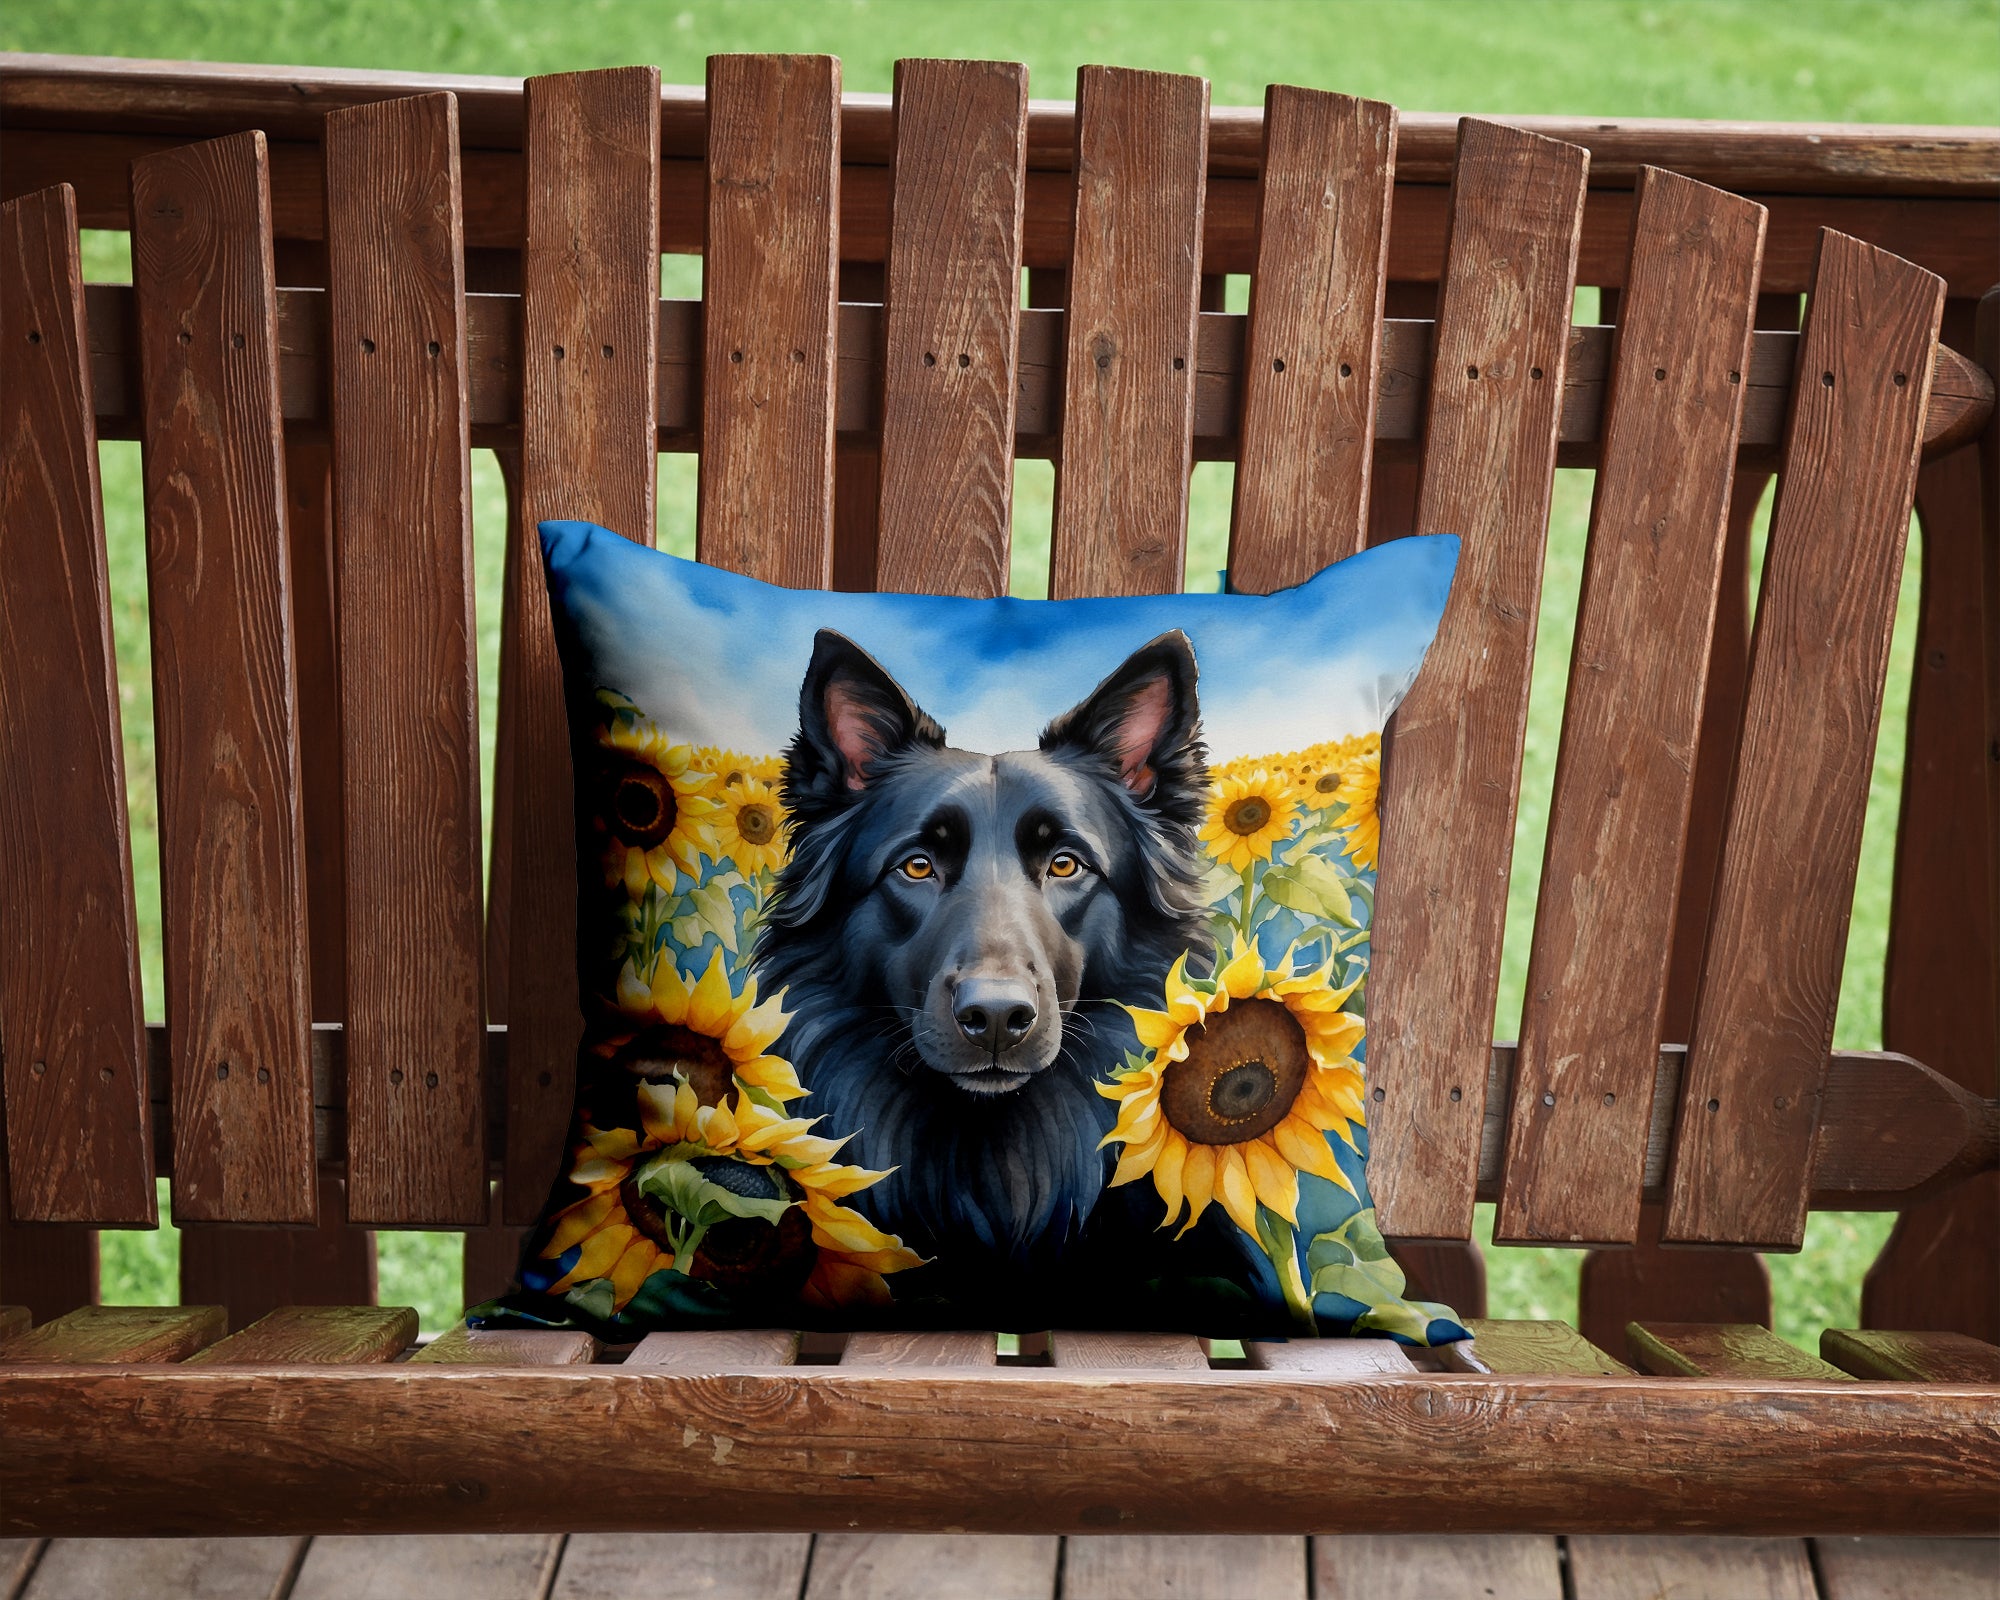 Belgian Sheepdog in Sunflowers Throw Pillow